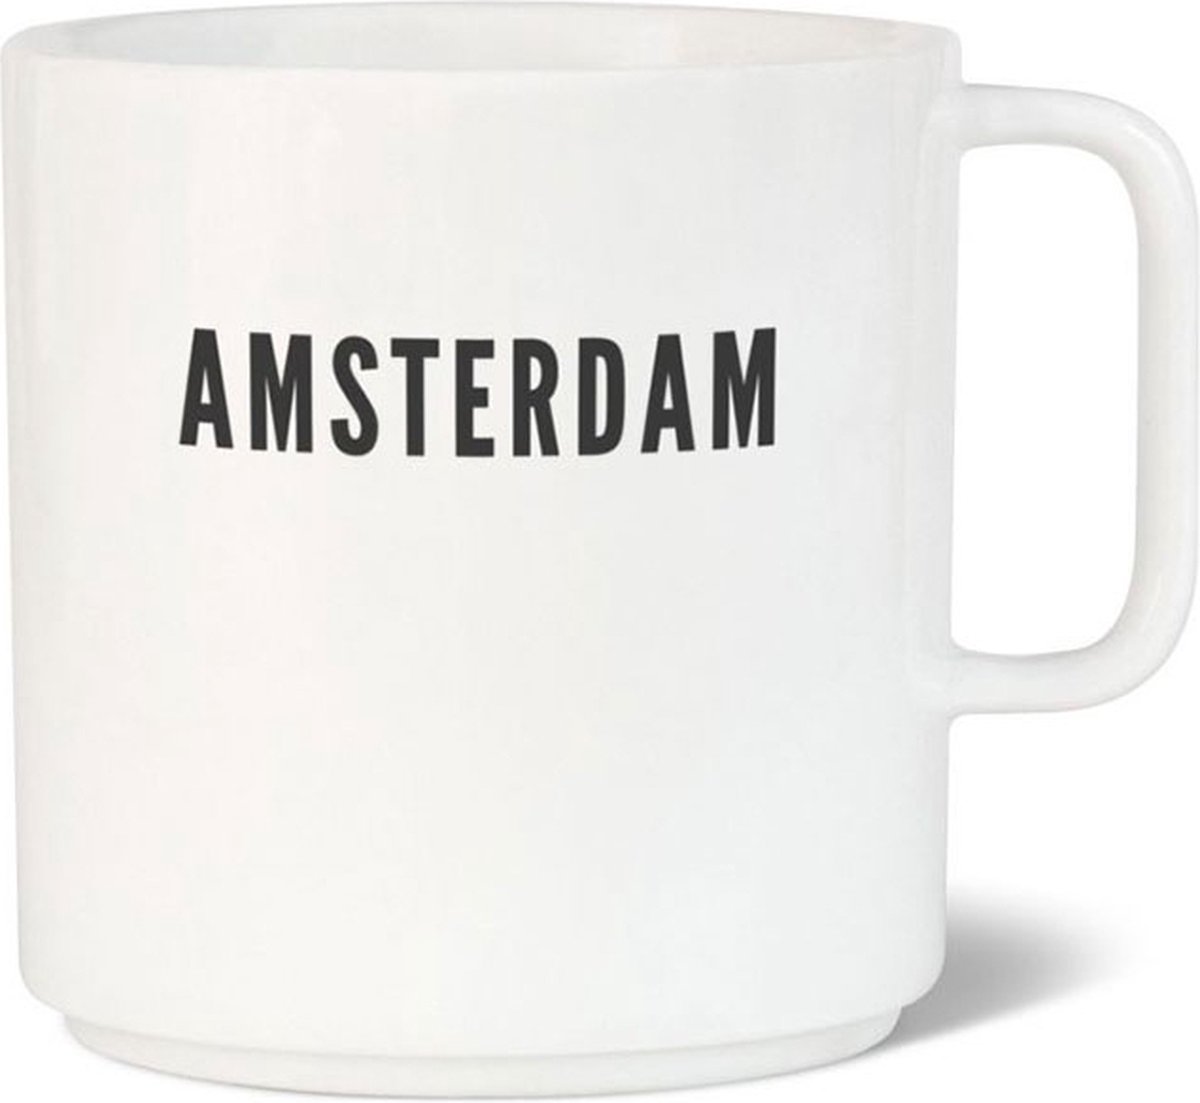 Amsterdam City Coffee mug